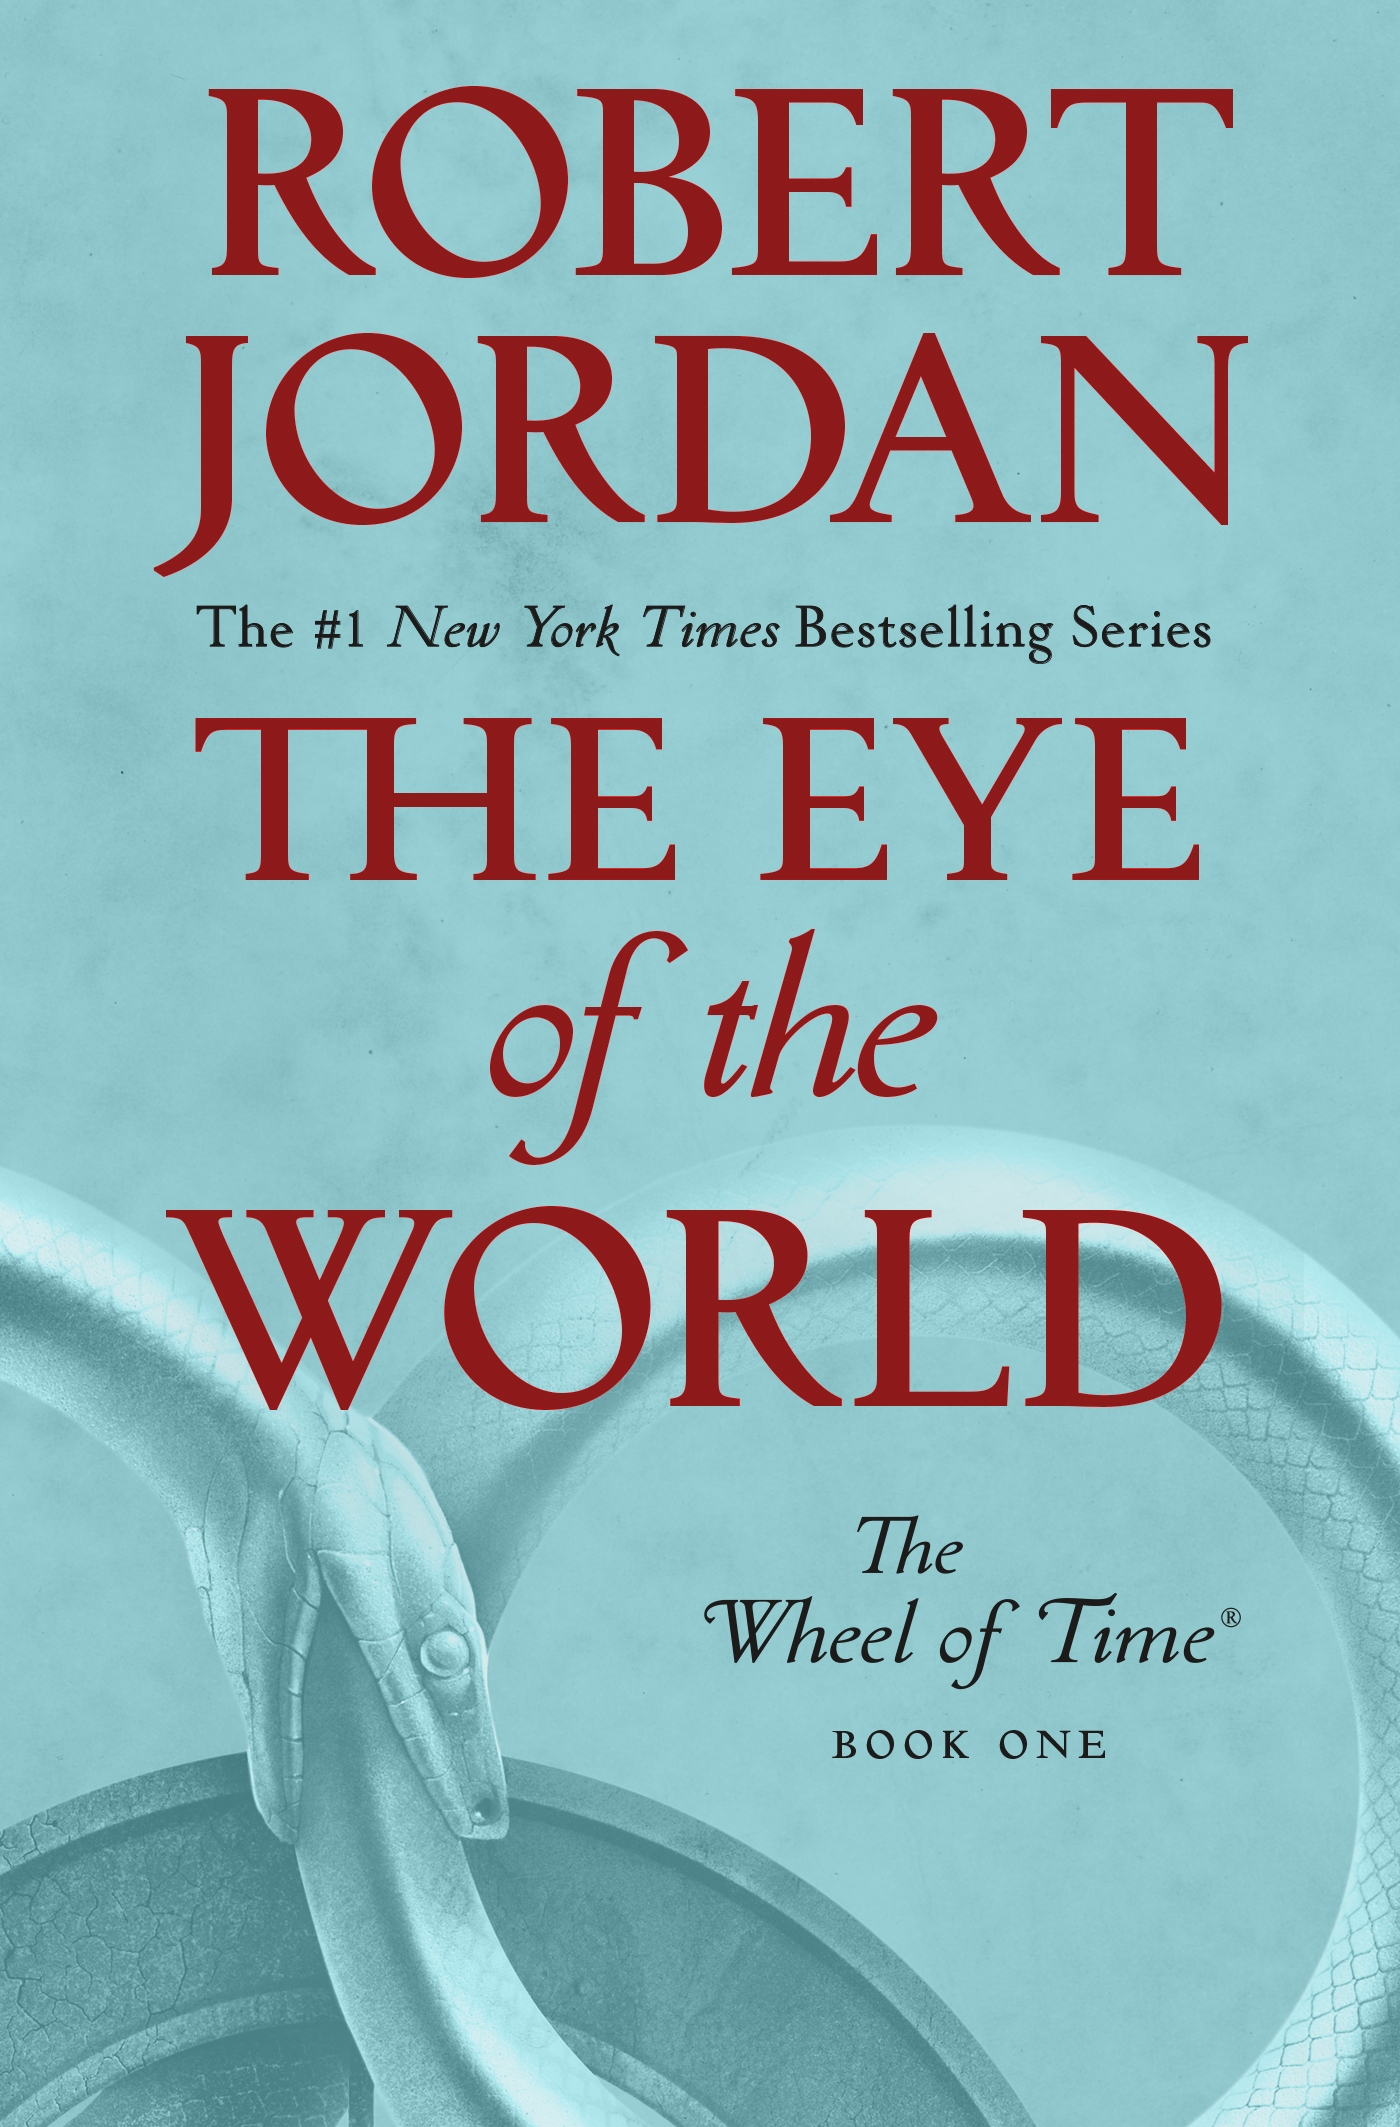 Book “The Eye of the World” by Robert Jordan — October 29, 2019